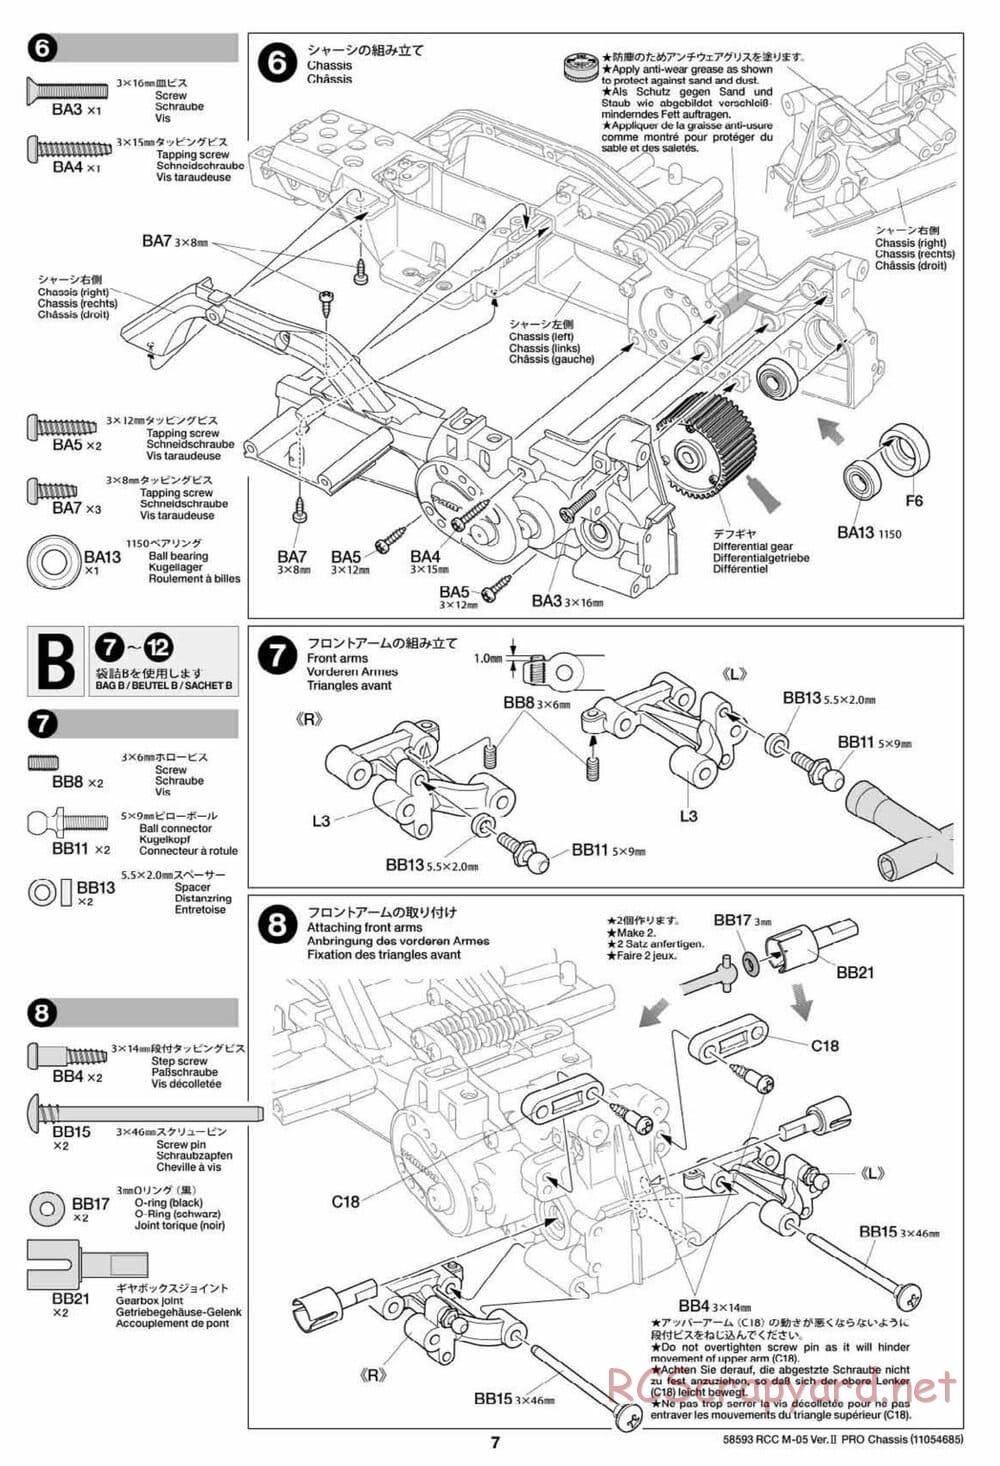 Tamiya - M-05 Ver.II Pro Chassis - Manual - Page 7